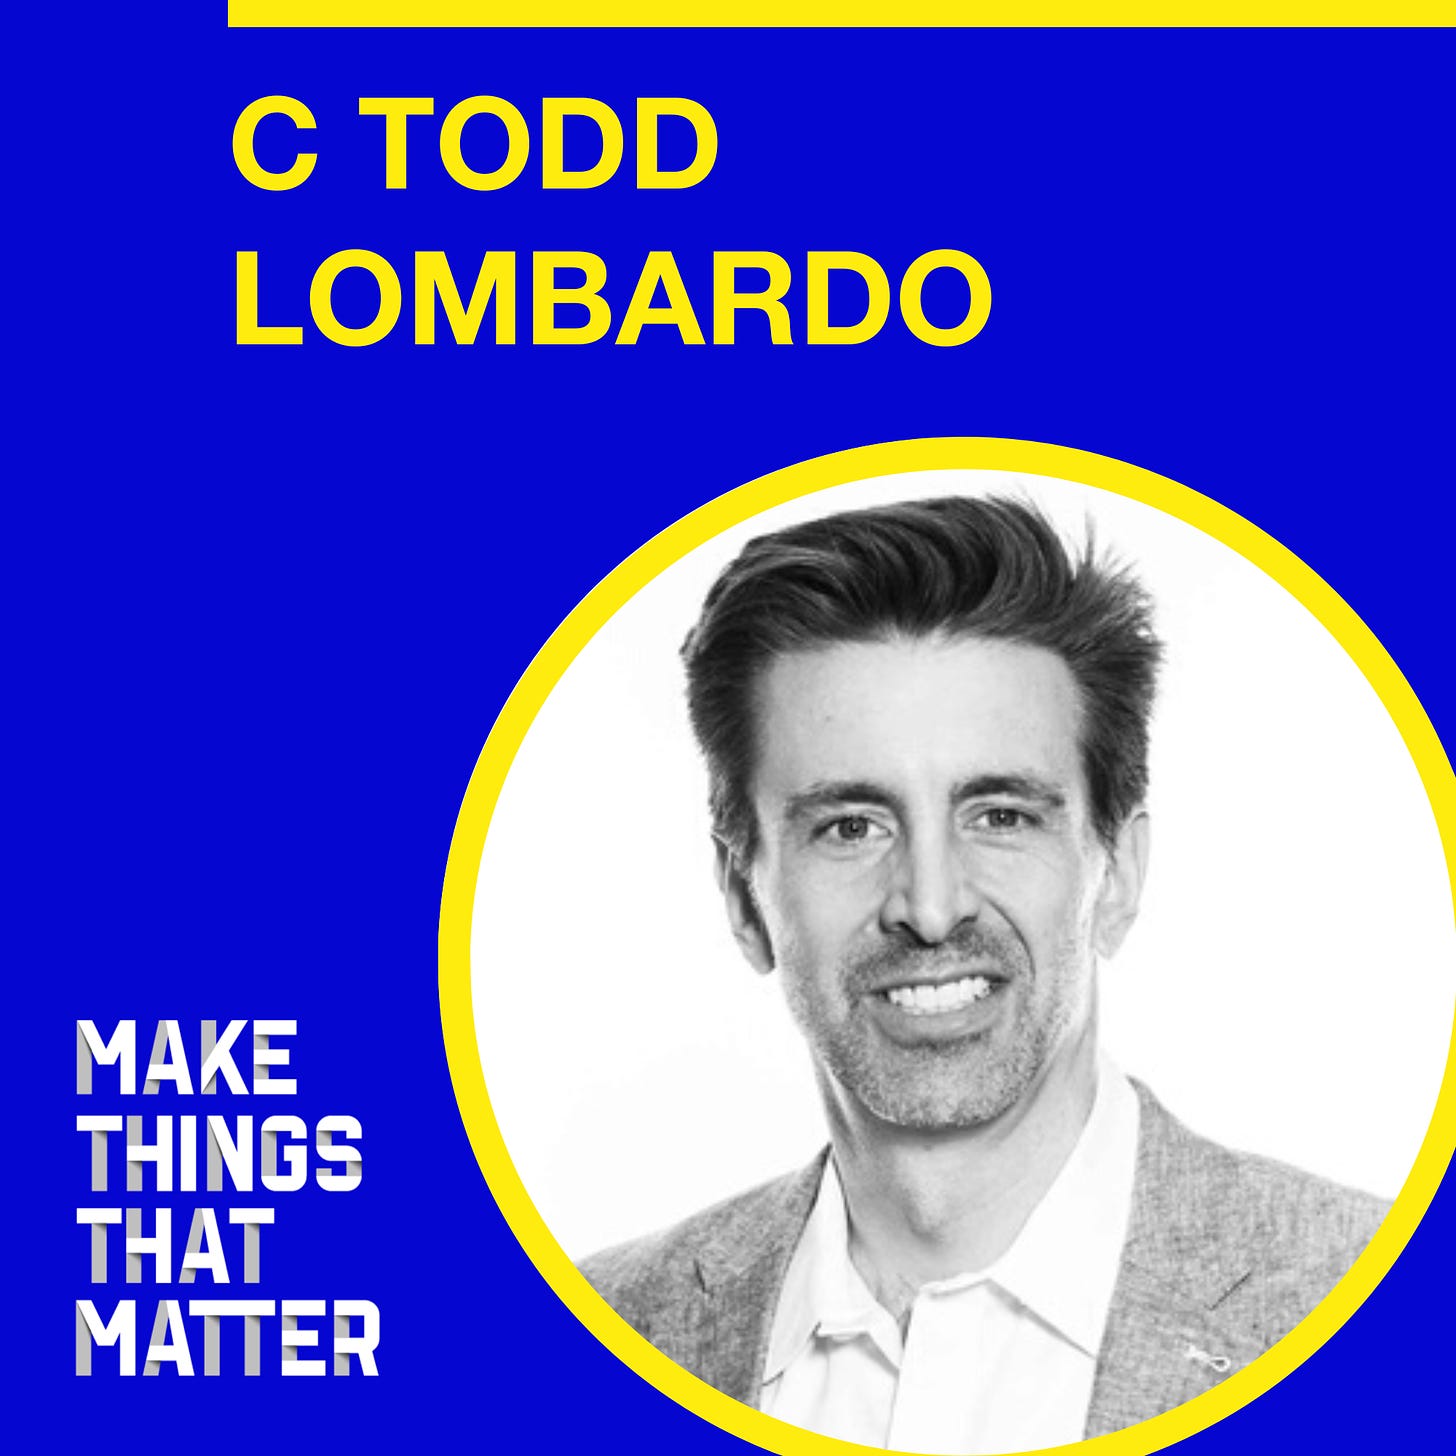 C Todd Lombardo